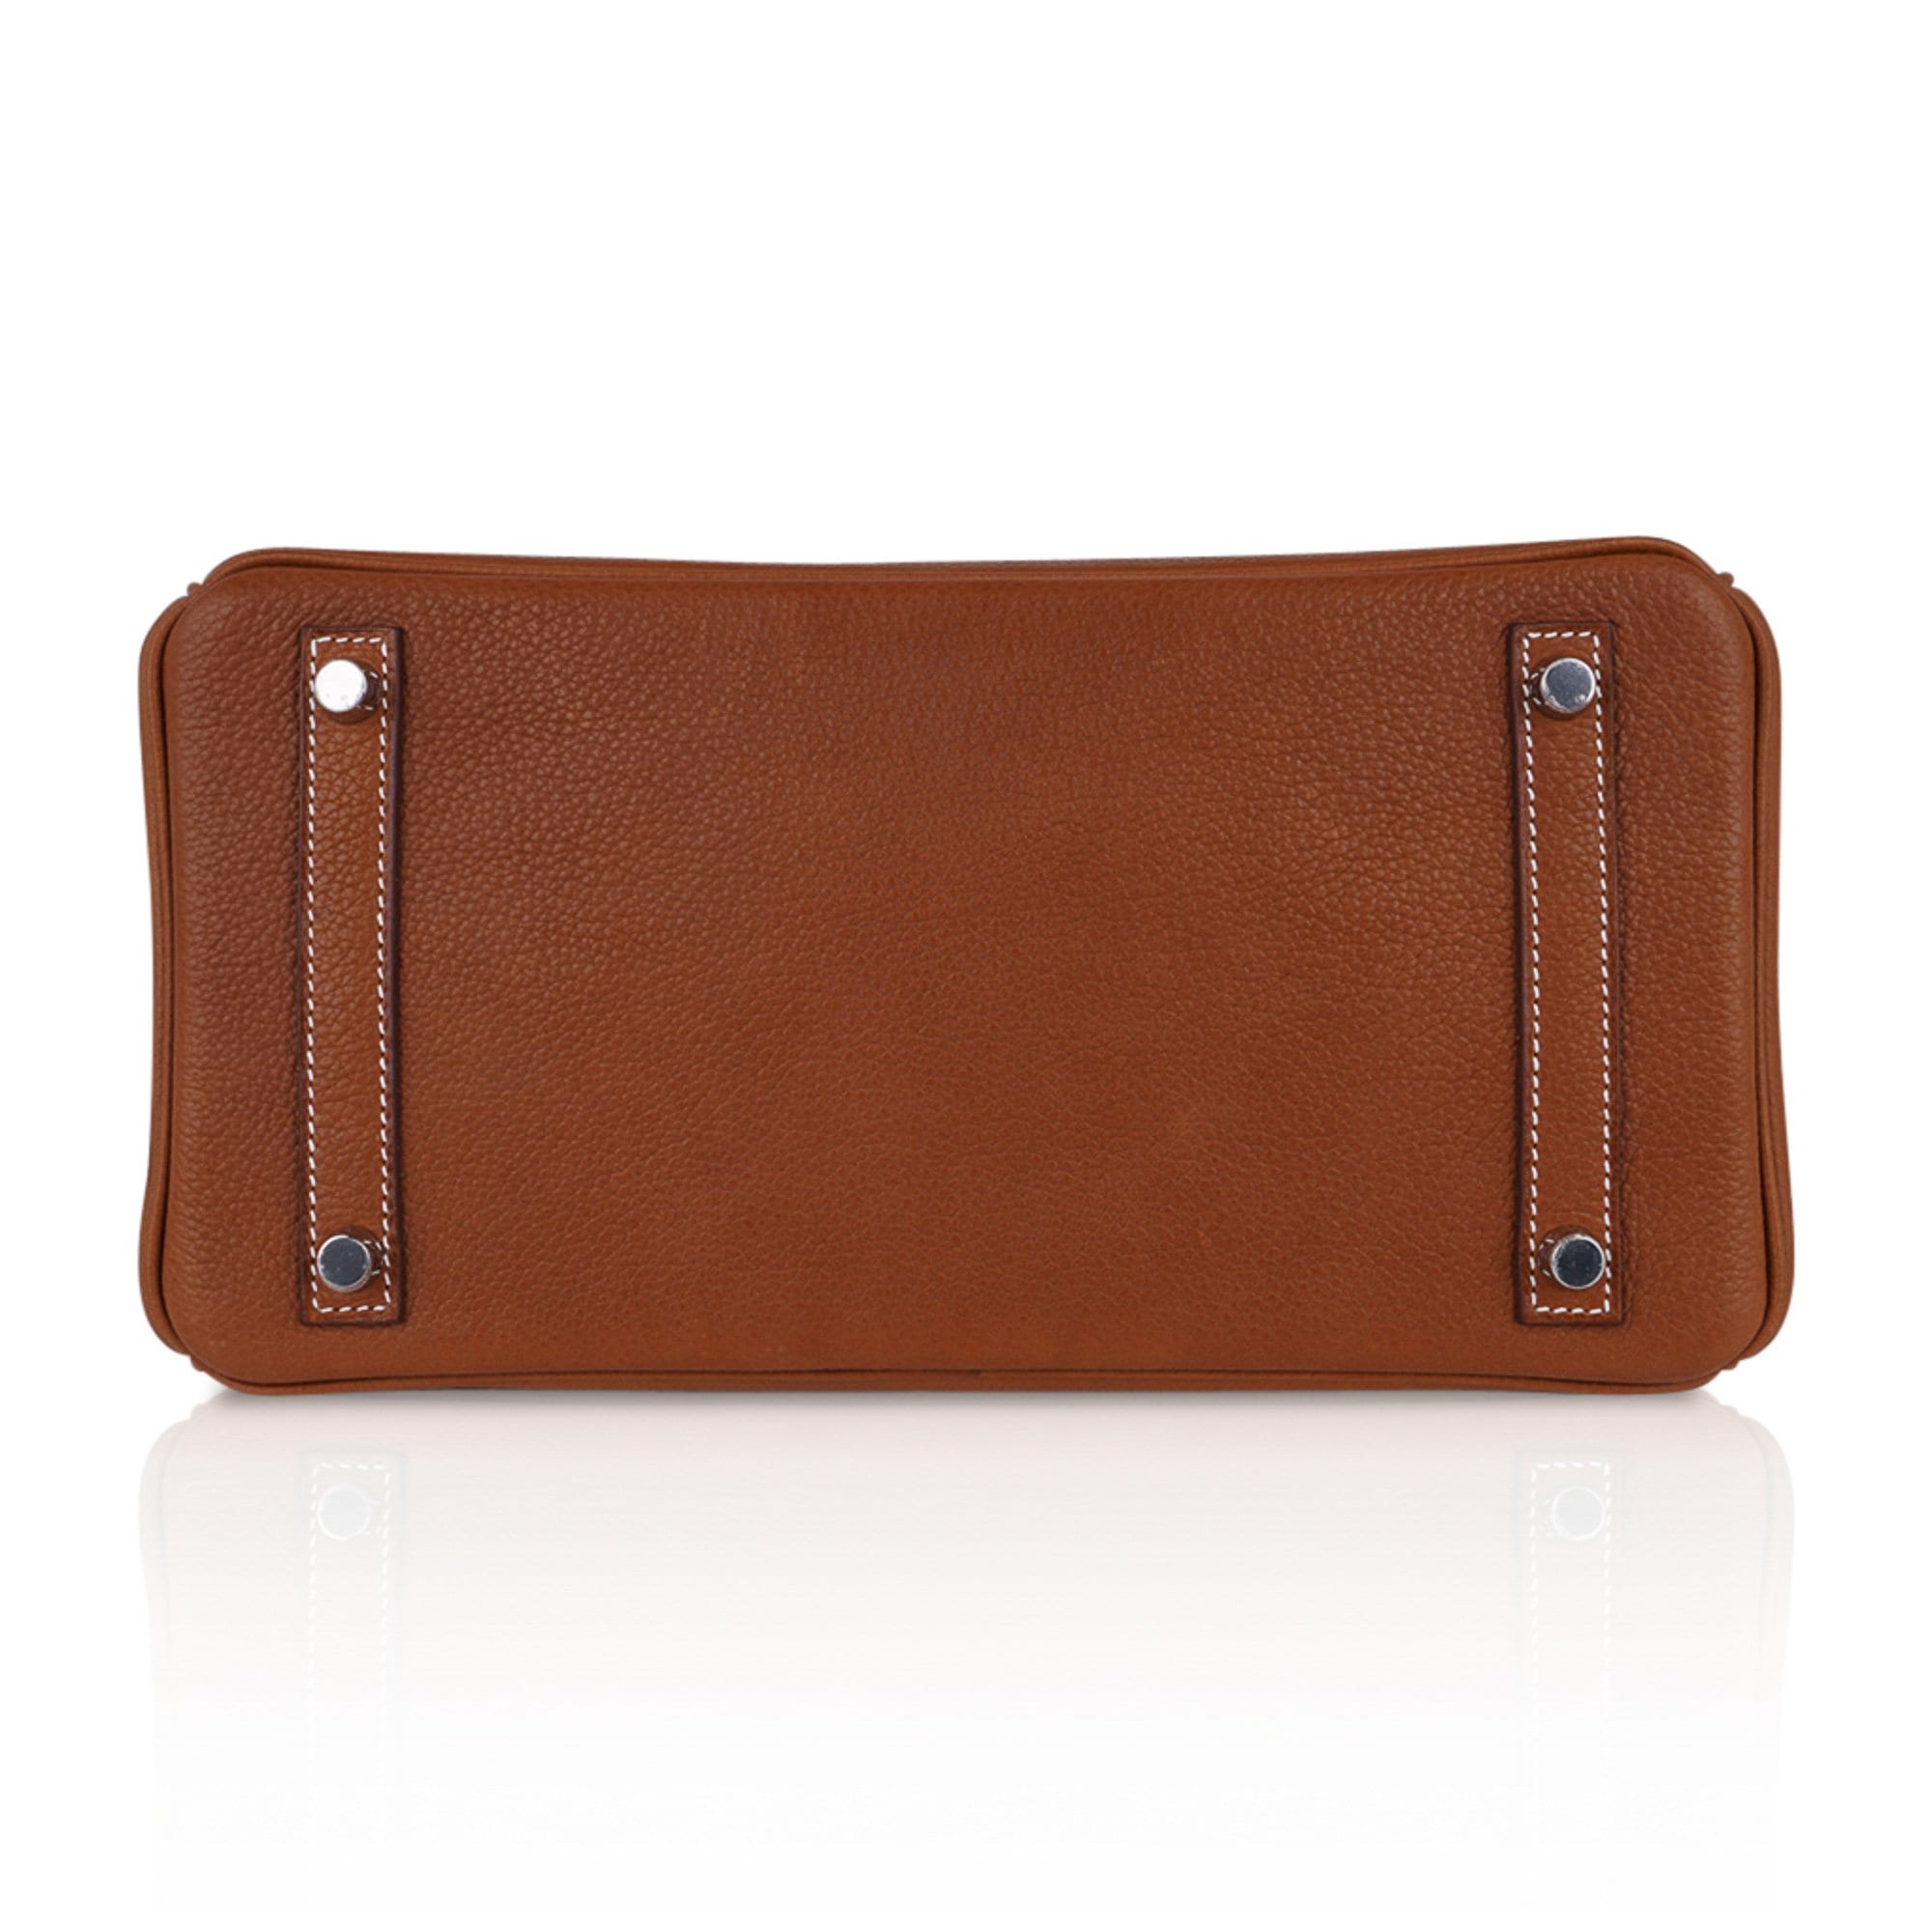 Hermès Barenia Faubourg Birkin 30 - Brown Handle Bags, Handbags - HER559721